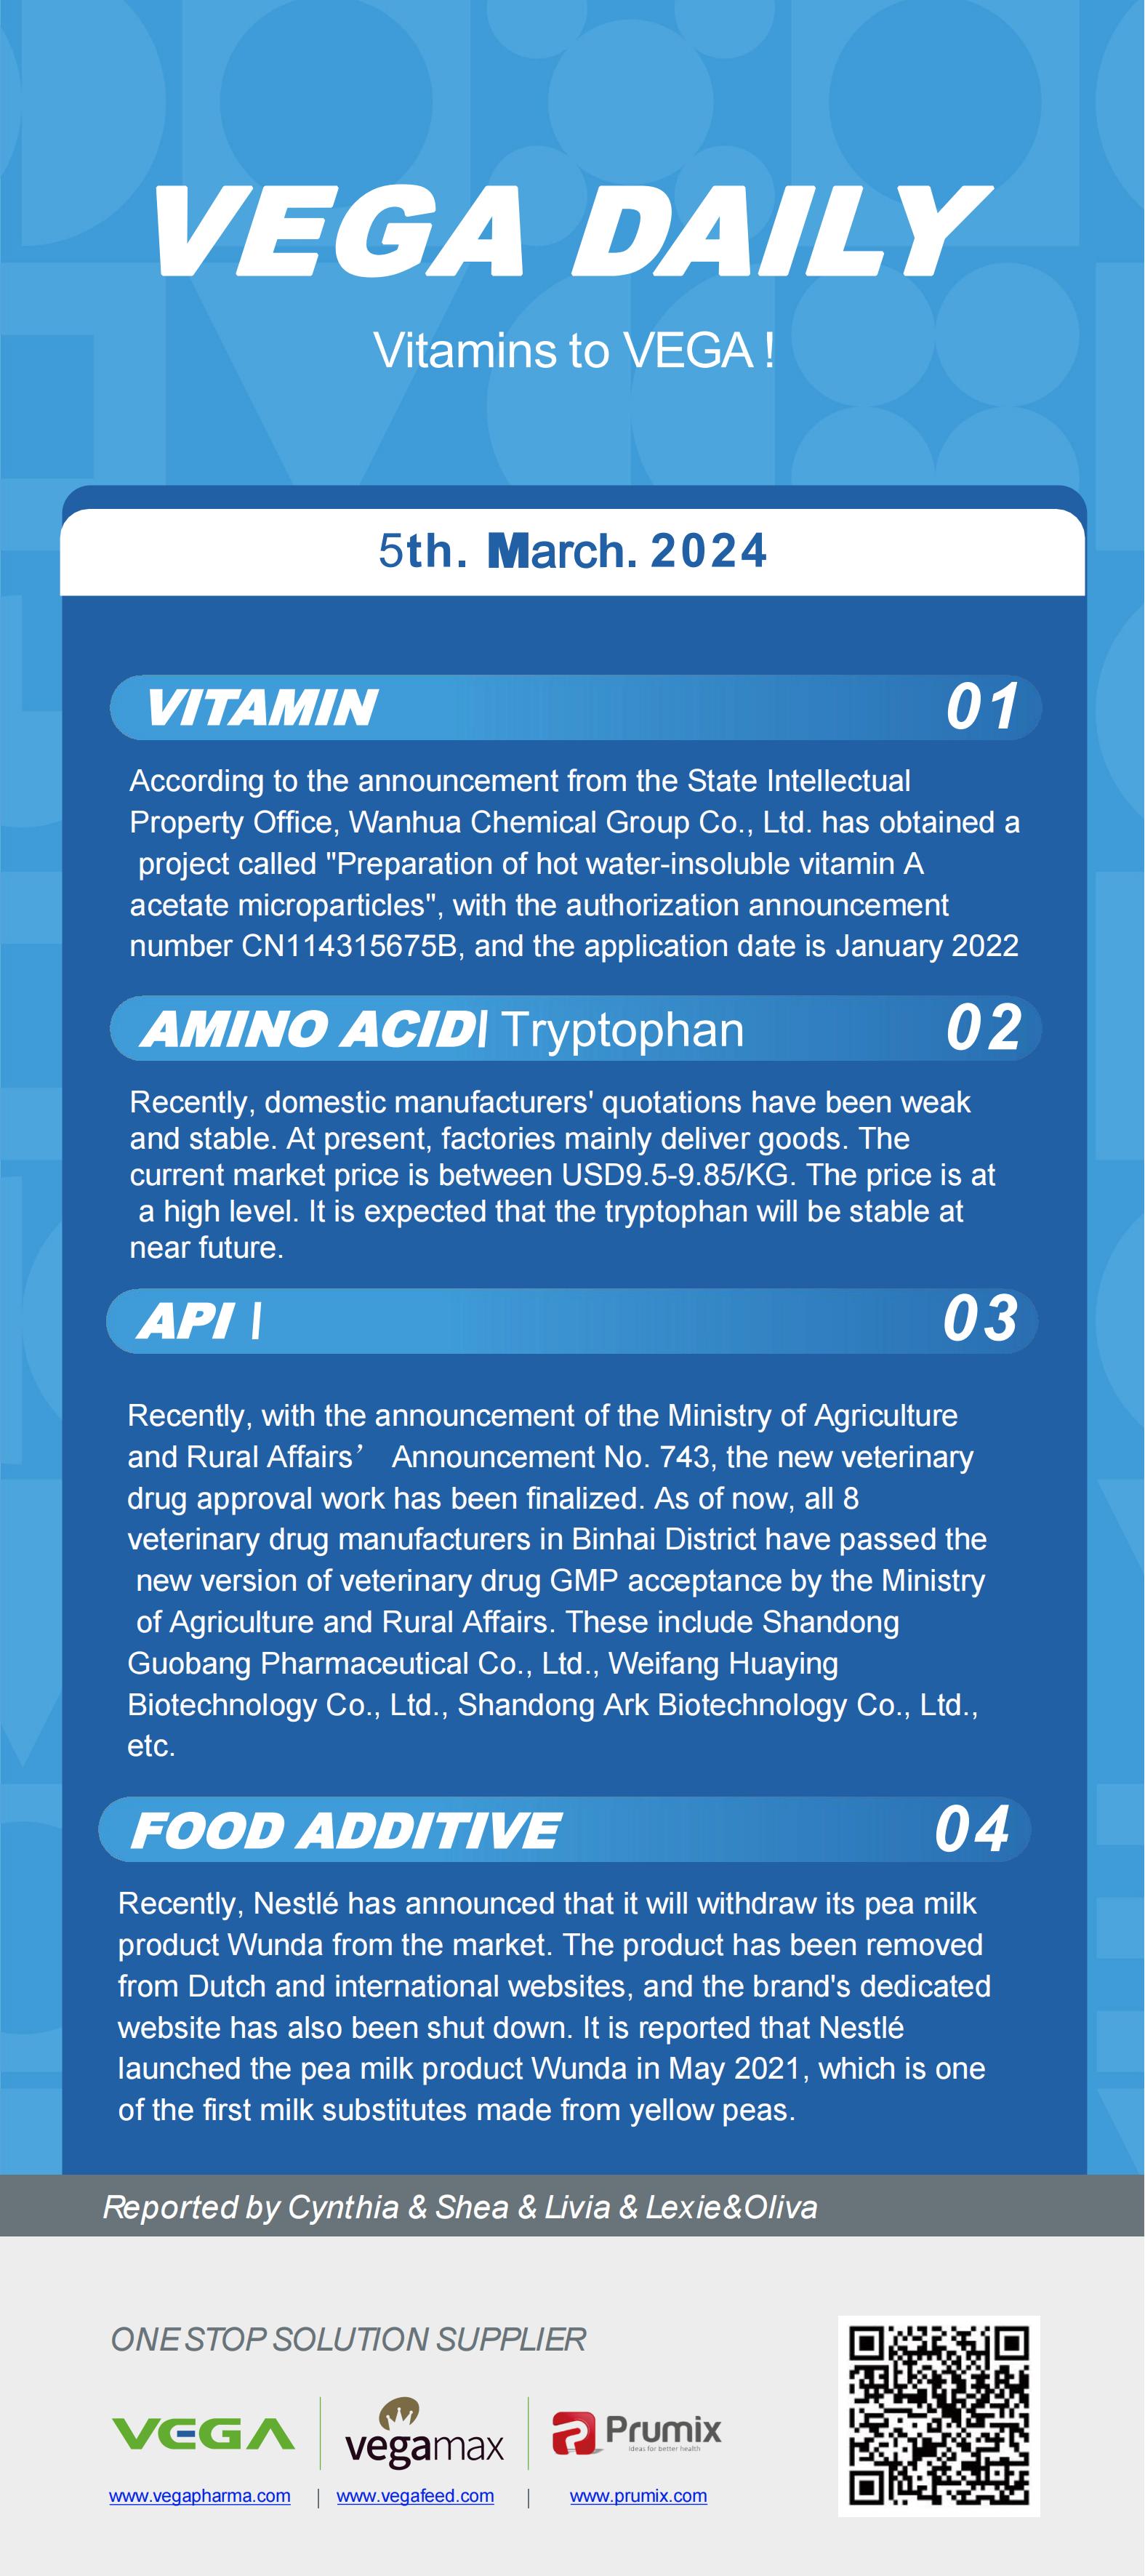 Vega Daily Dated on Mar 5th 2024 Vitamin Amino Acid APl Food Additives.jpg